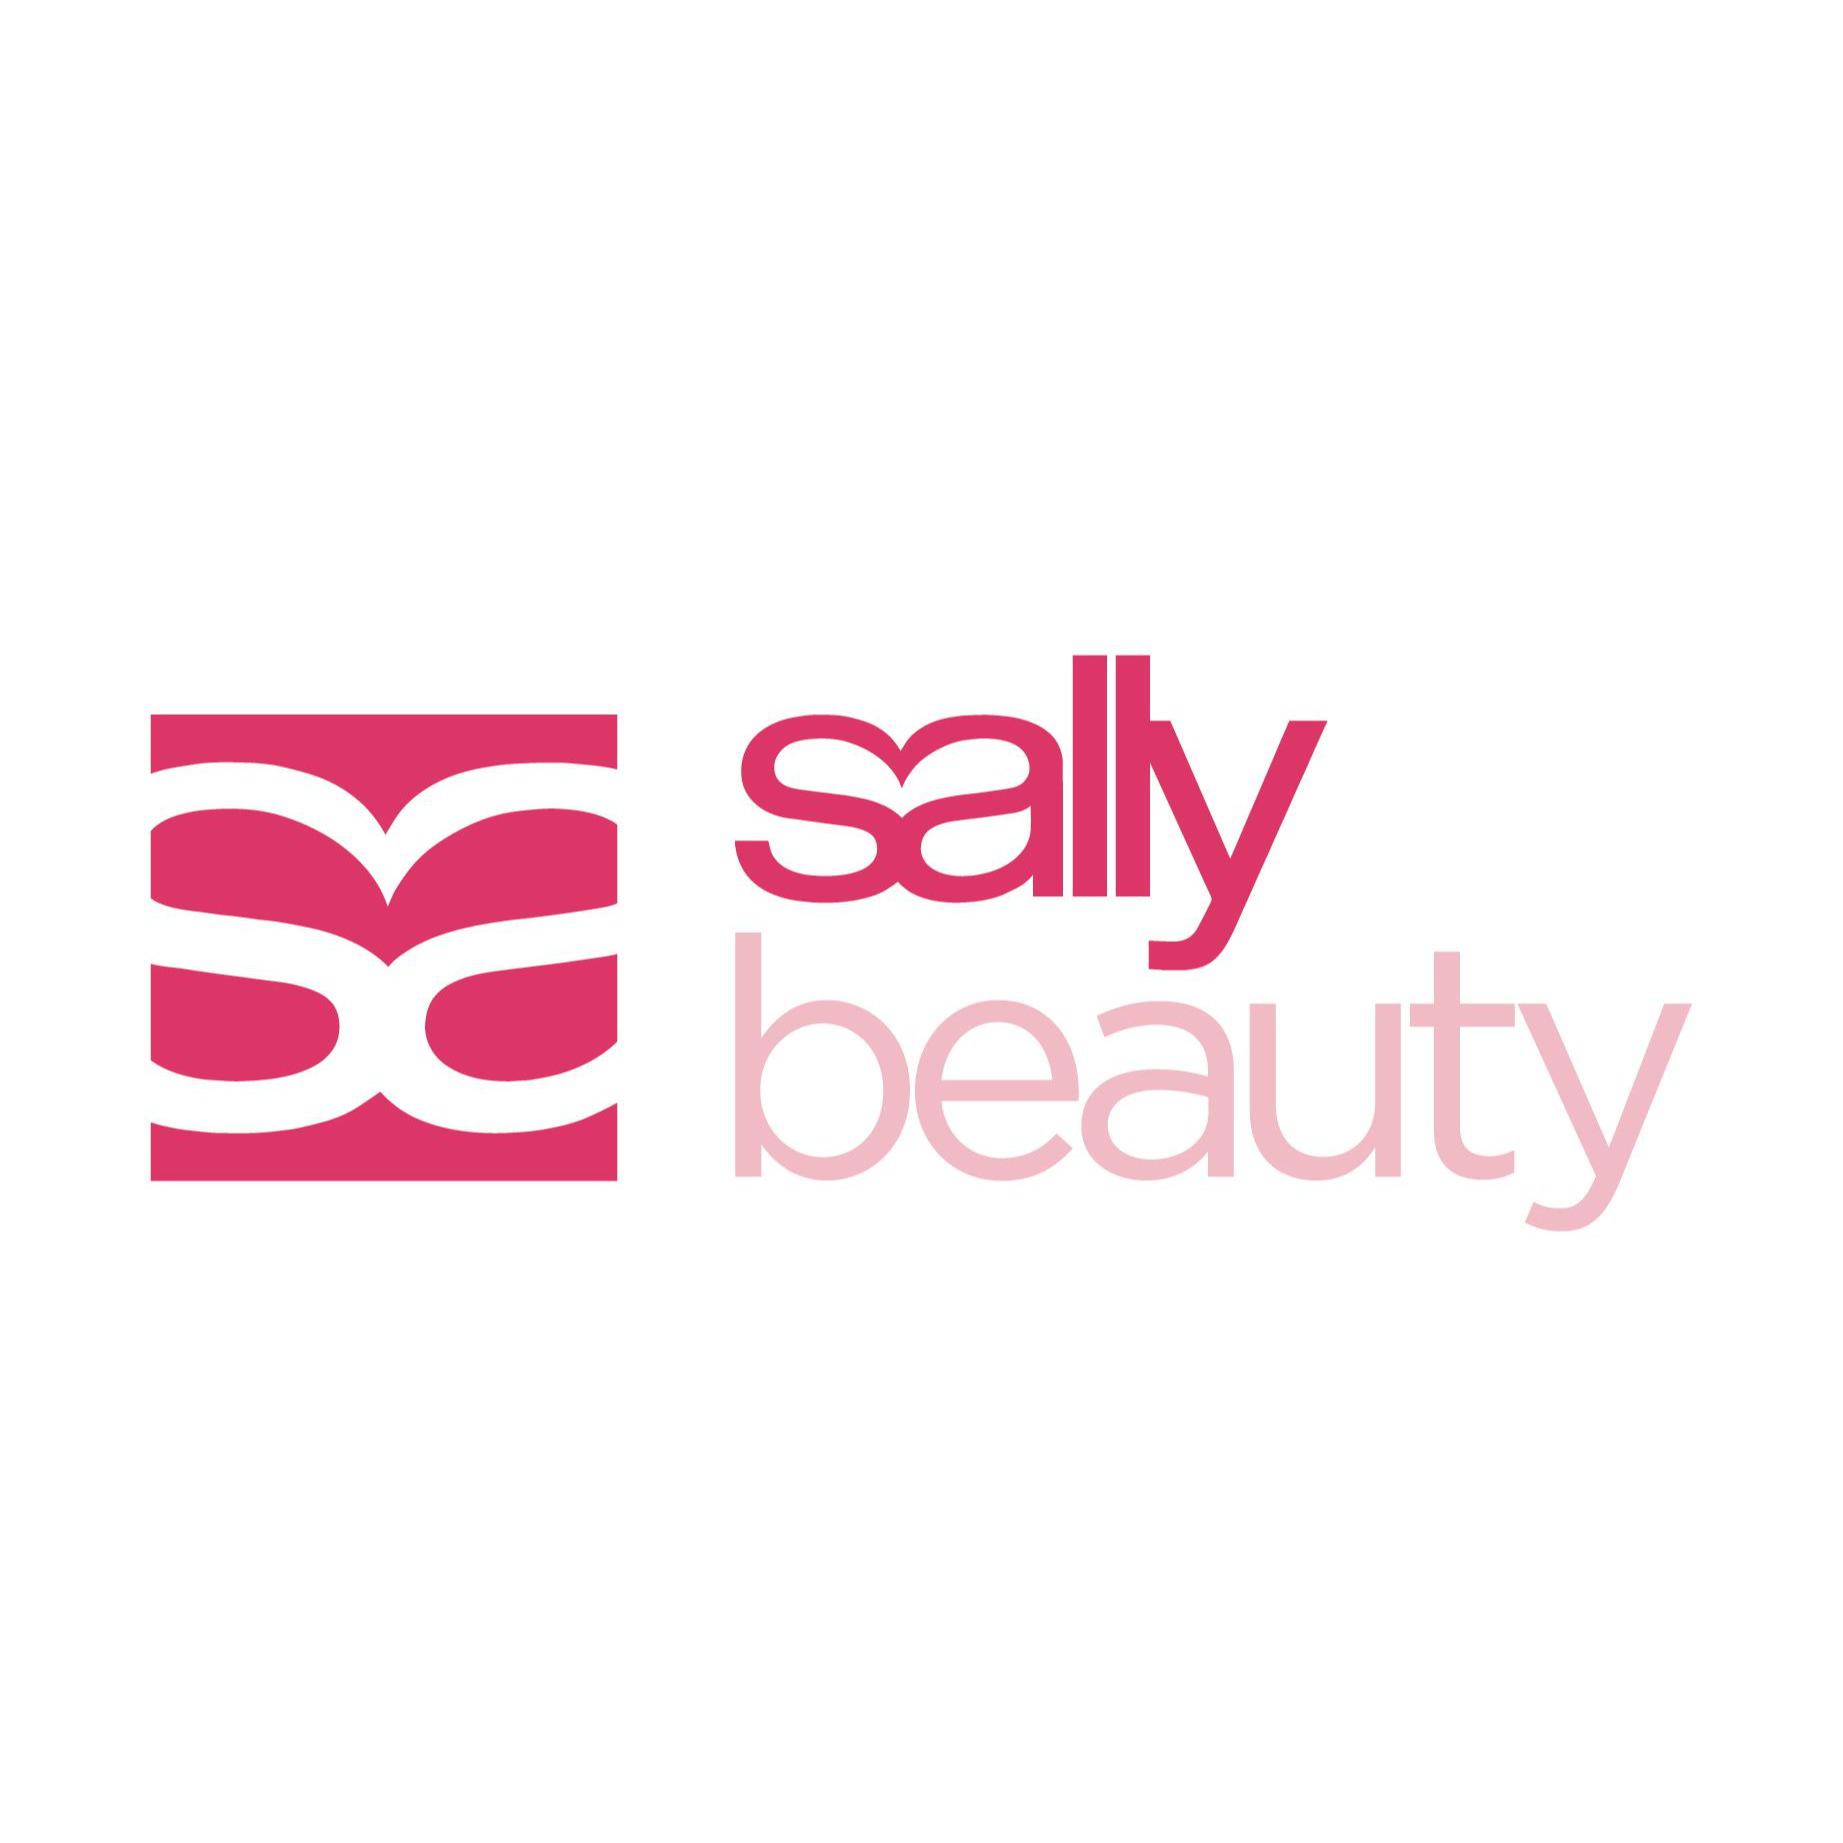 Sally Beauty - Newcastle Upon Tyne, Tyne and Wear NE4 7HX - 01912 260077 | ShowMeLocal.com